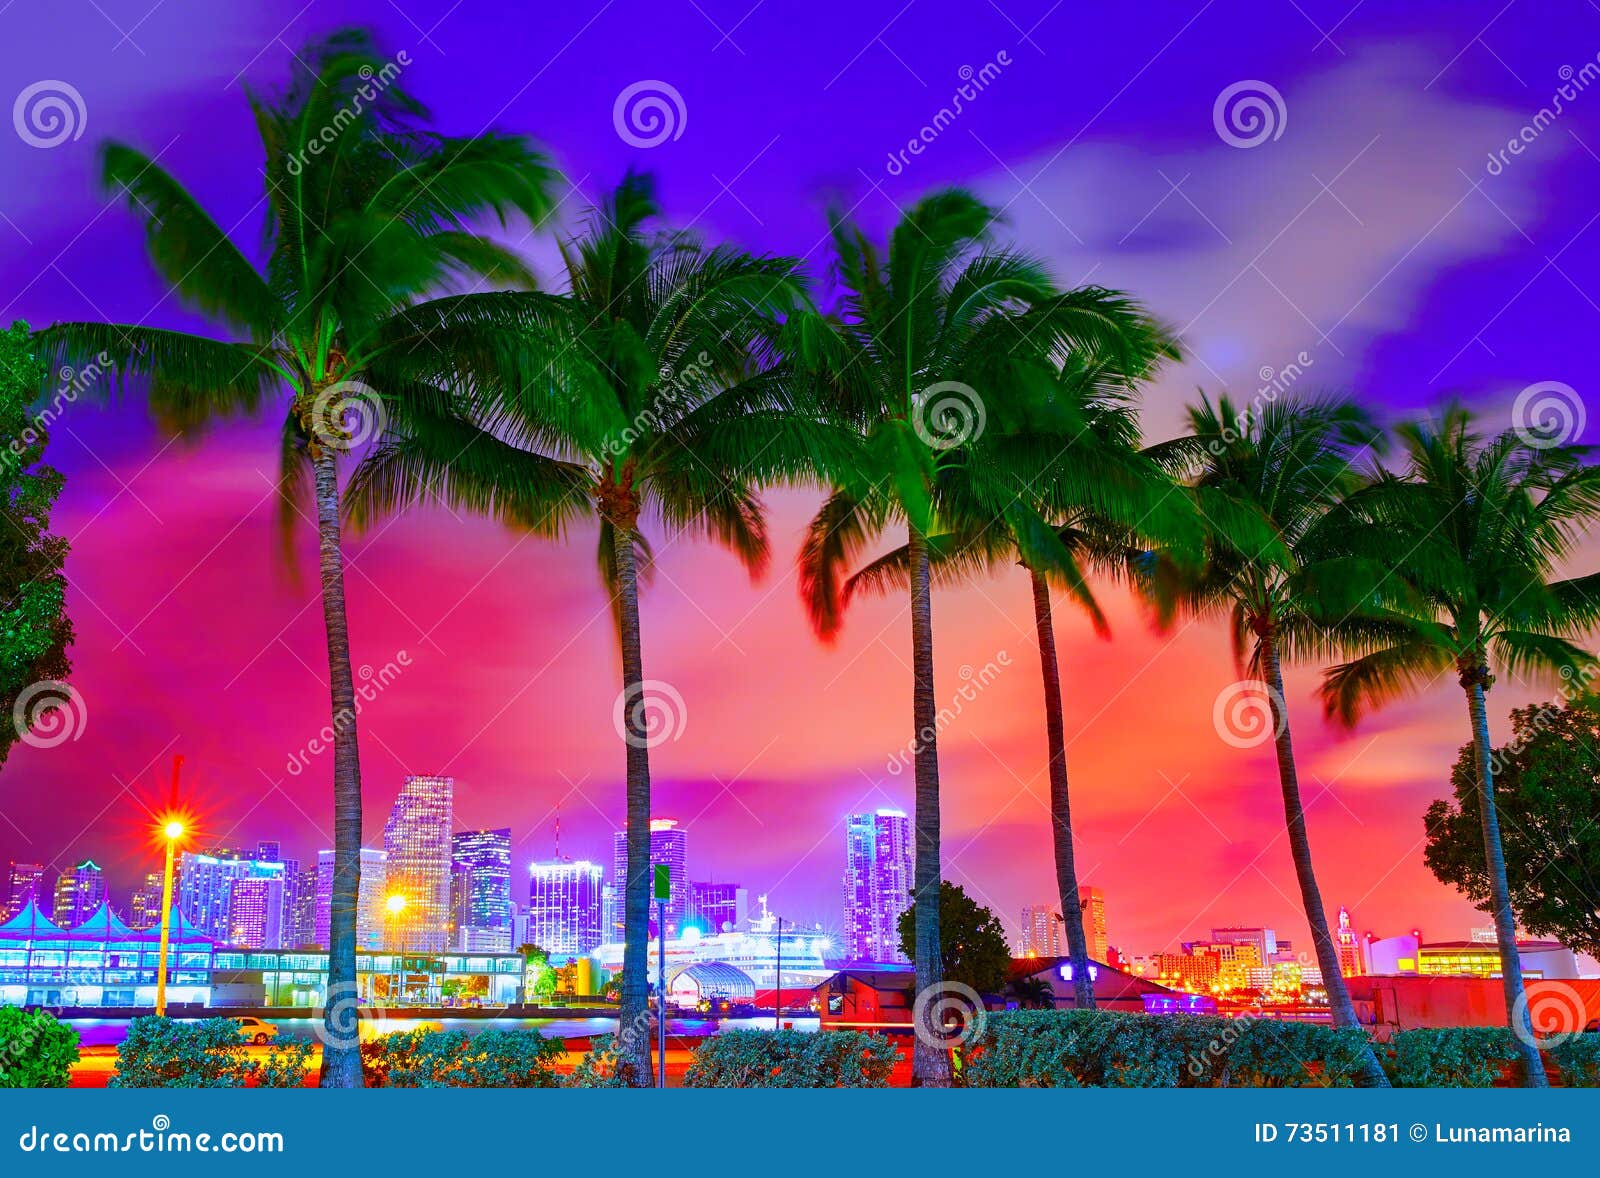 miami skyline sunset with palm trees florida